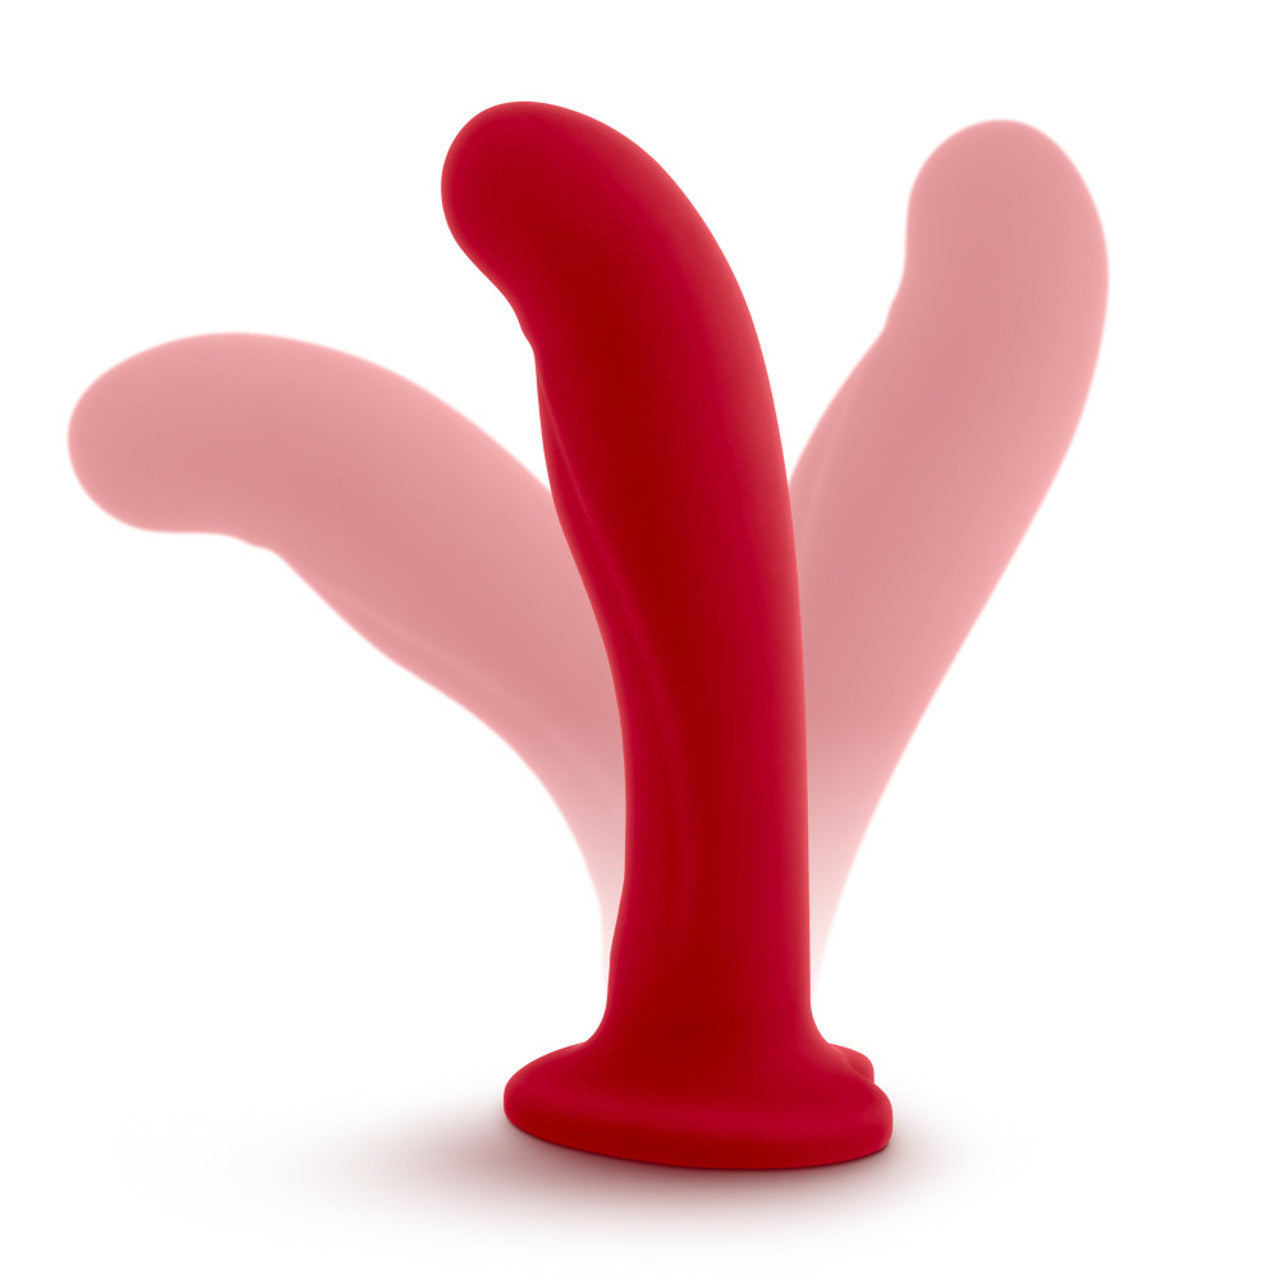 Temptasia Jezebel Silicone G-Spot Dildo - Crimson - Thorn & Feather Sex Toy Canada